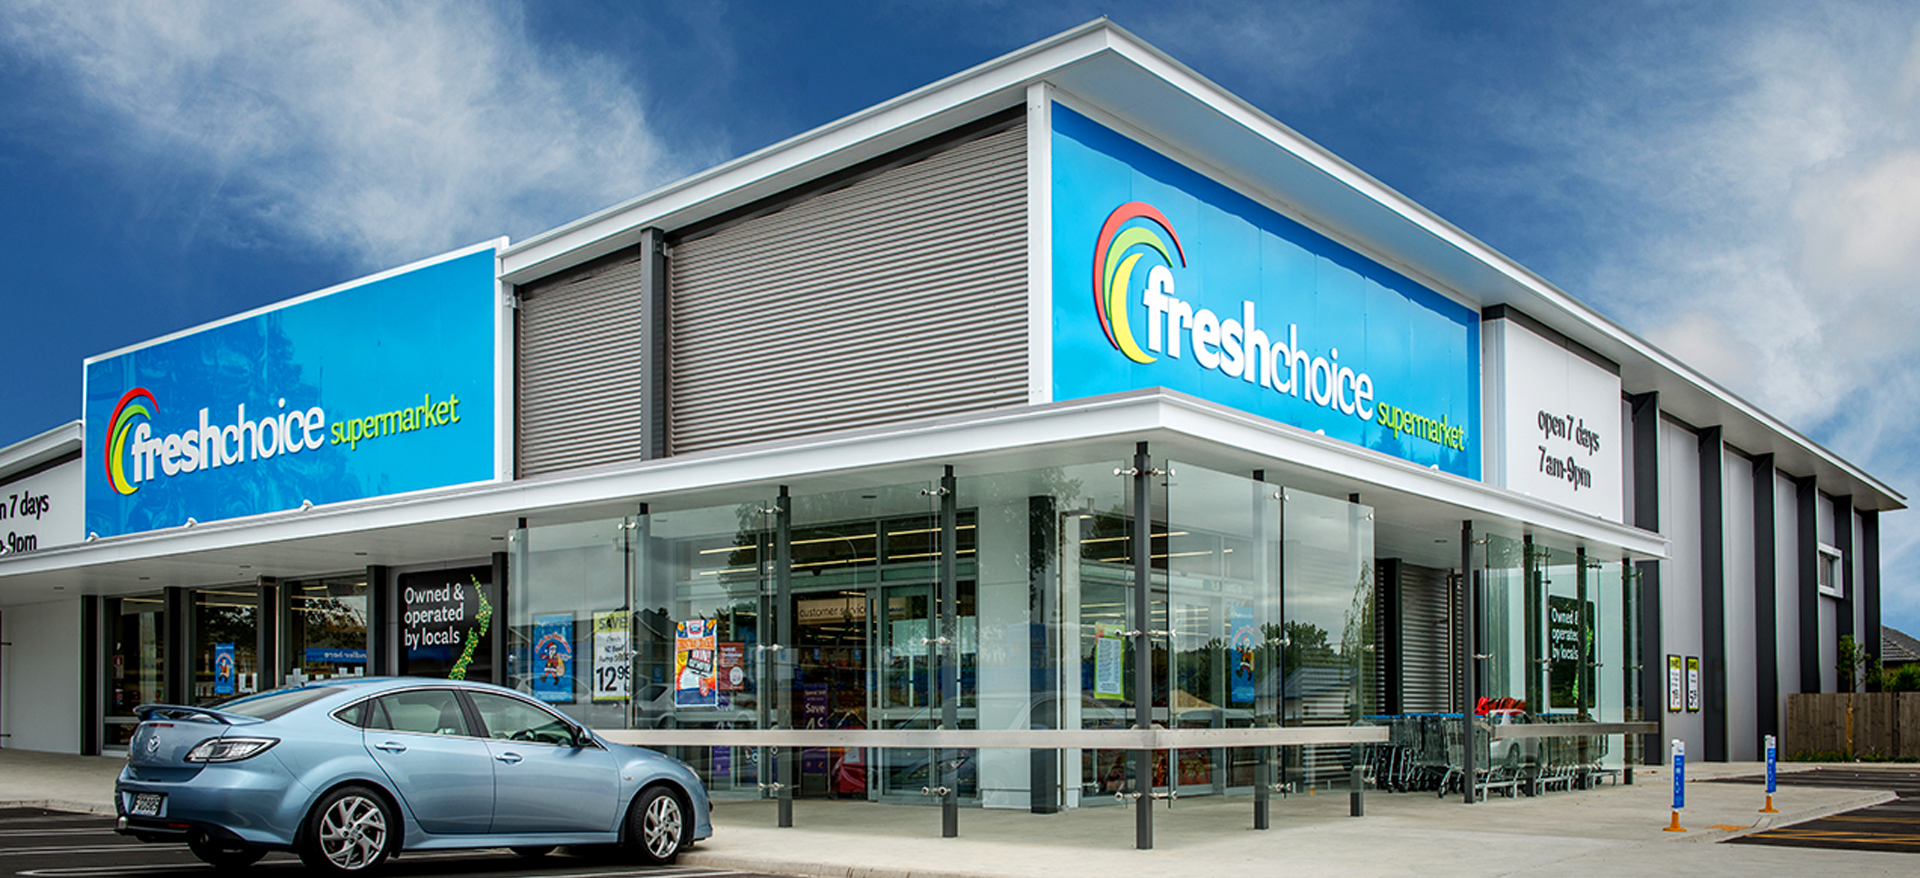 Fresh Choice Supermarket, Waikato